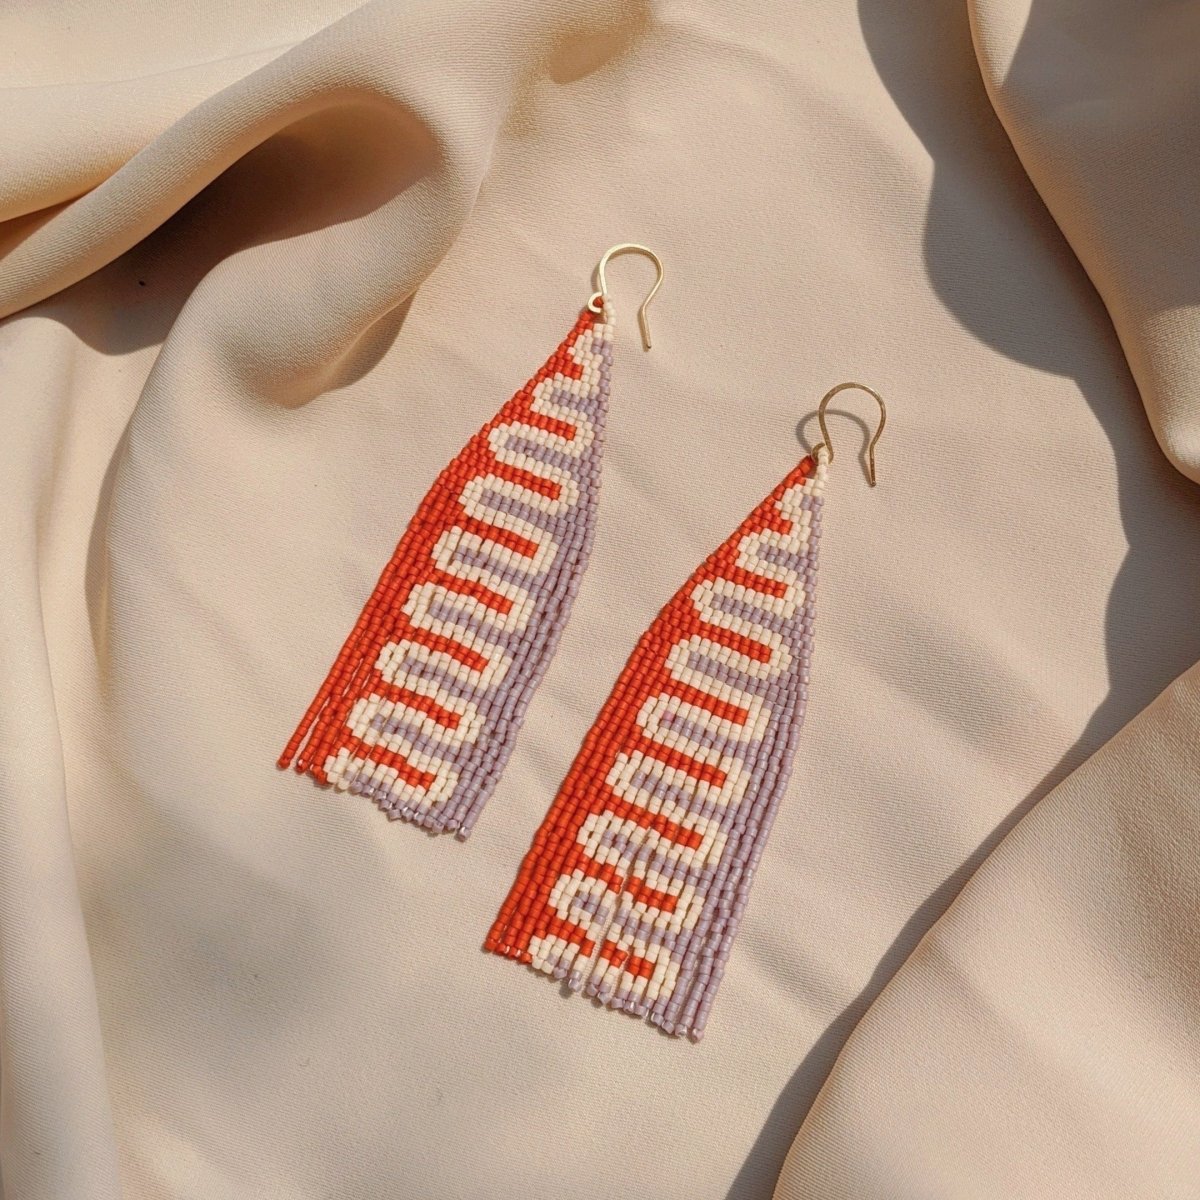 Woven red, white and pastel purple beaded fringe earrings. Designed and handmade by Take Shape studio in Berkeley, California.